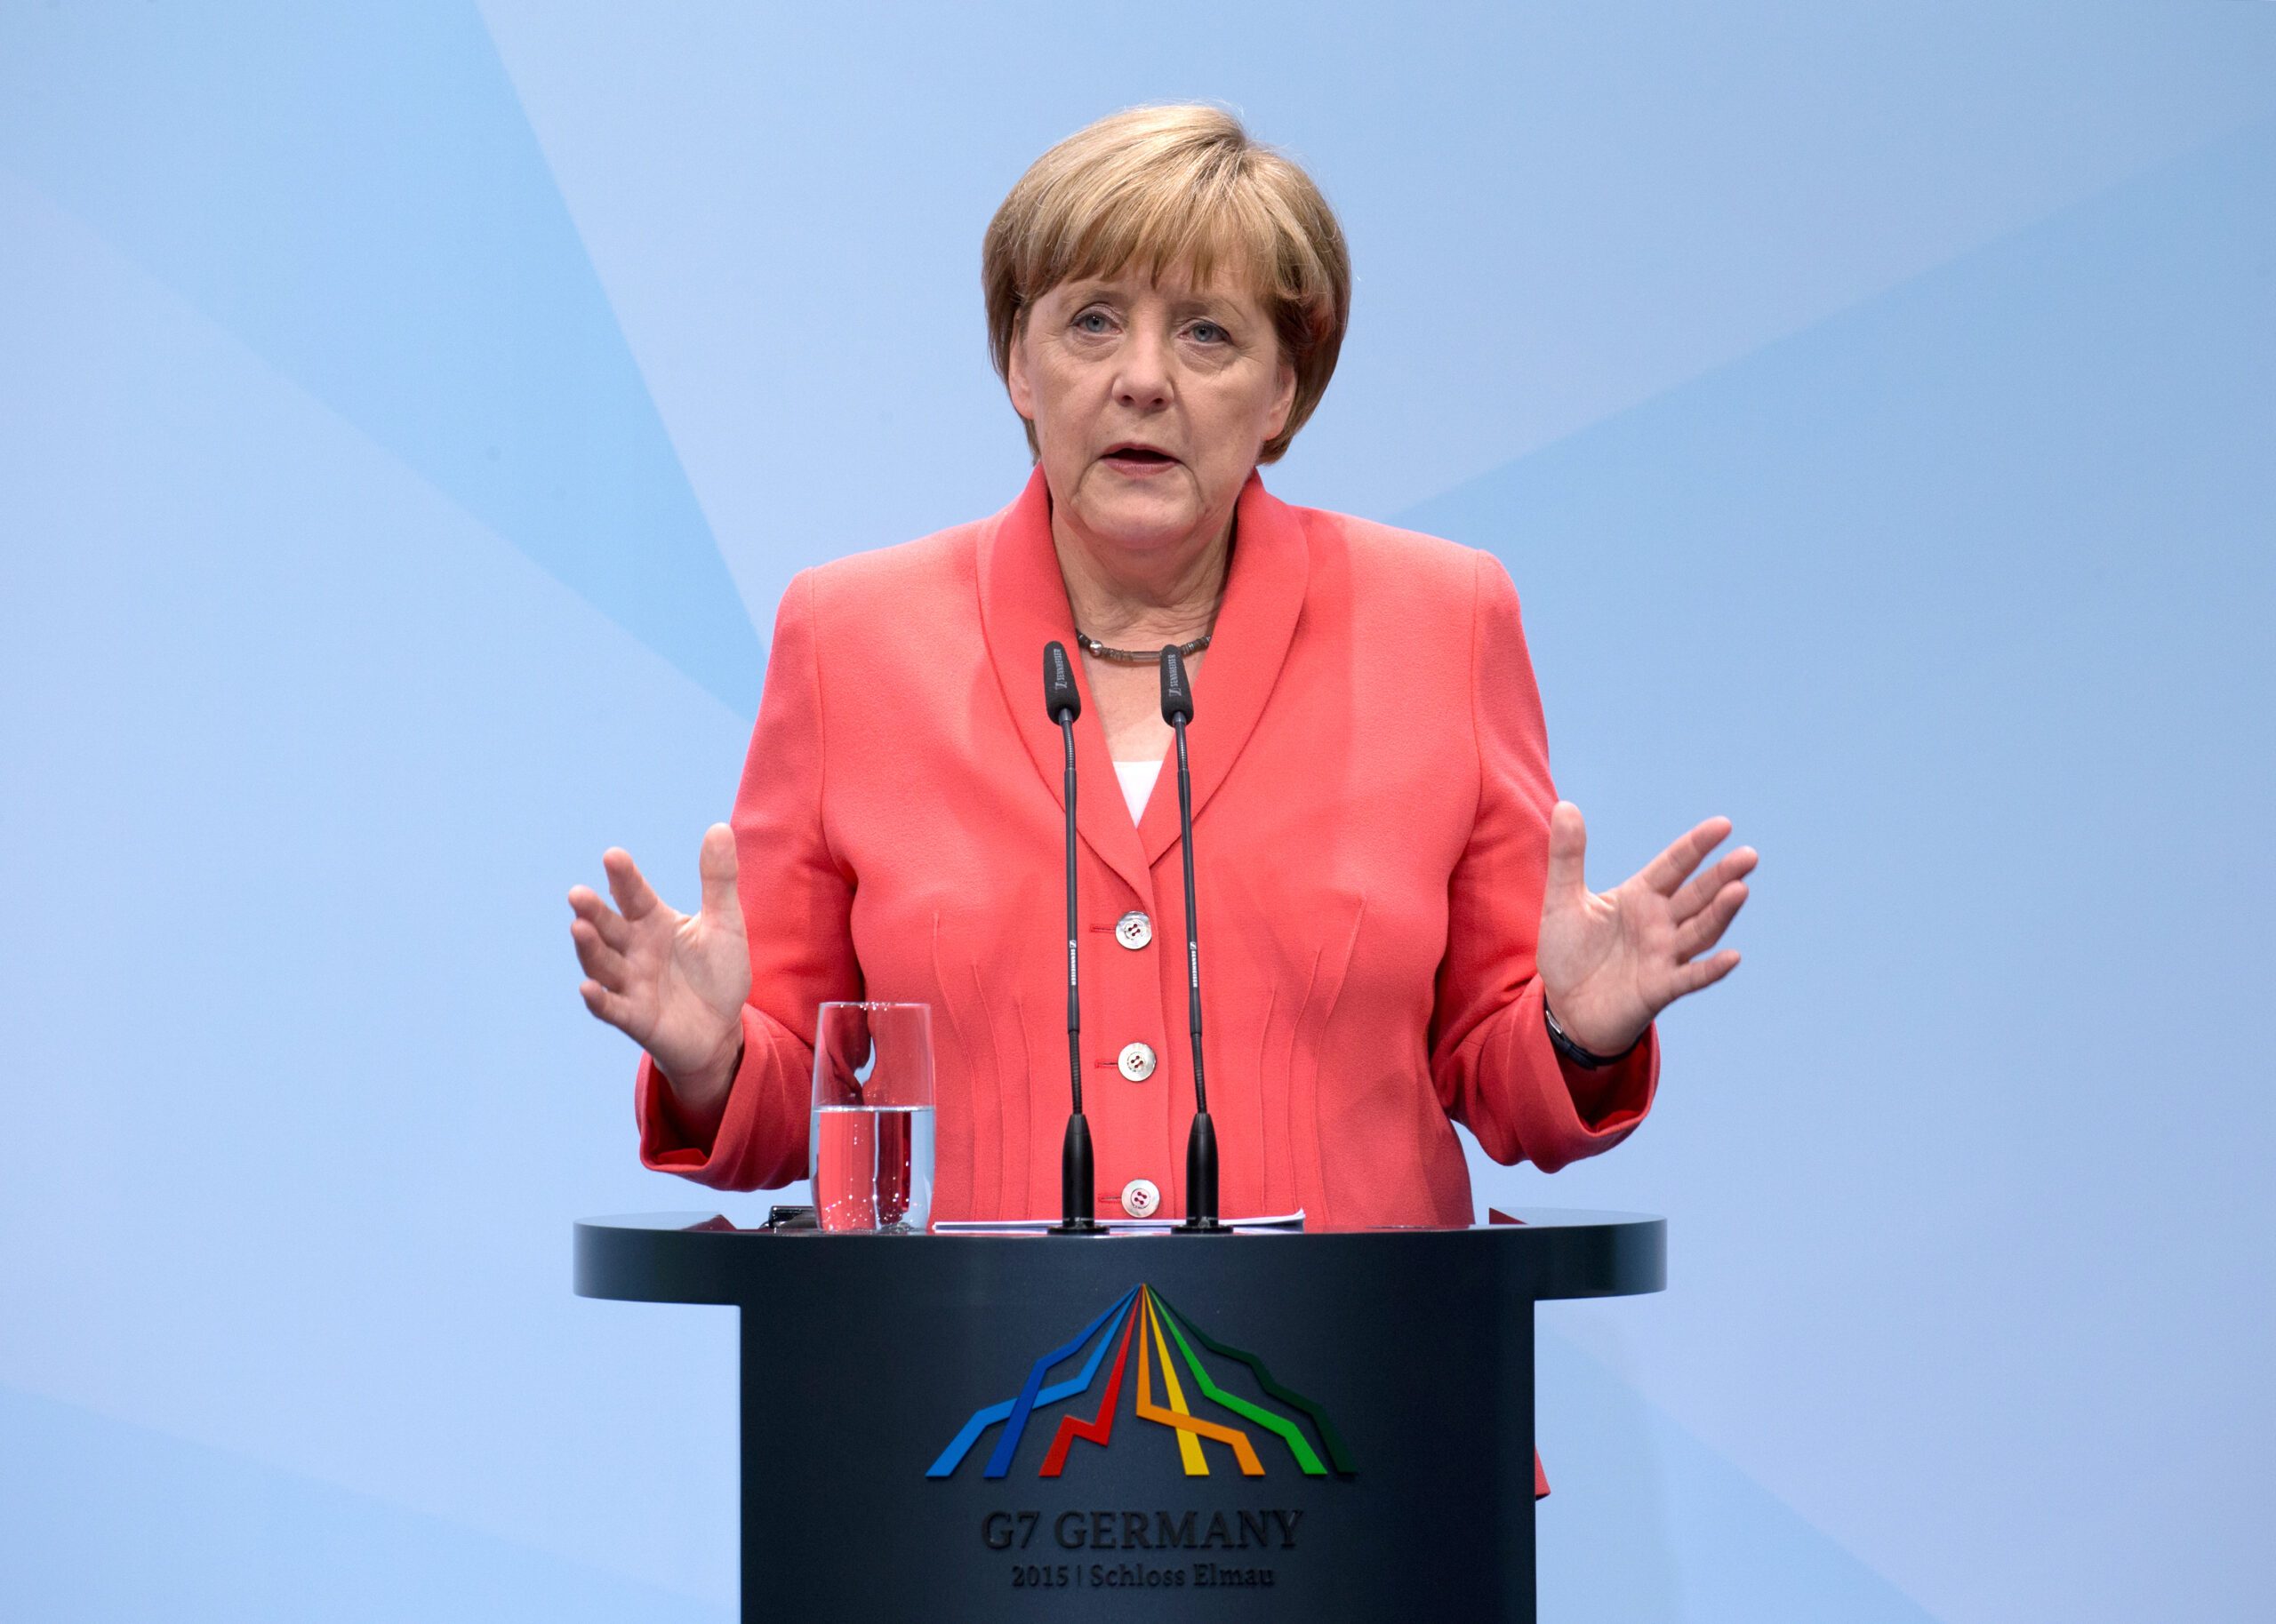 Merkel tells Putin to ‘use influence’ to rein in Ukraine rebels